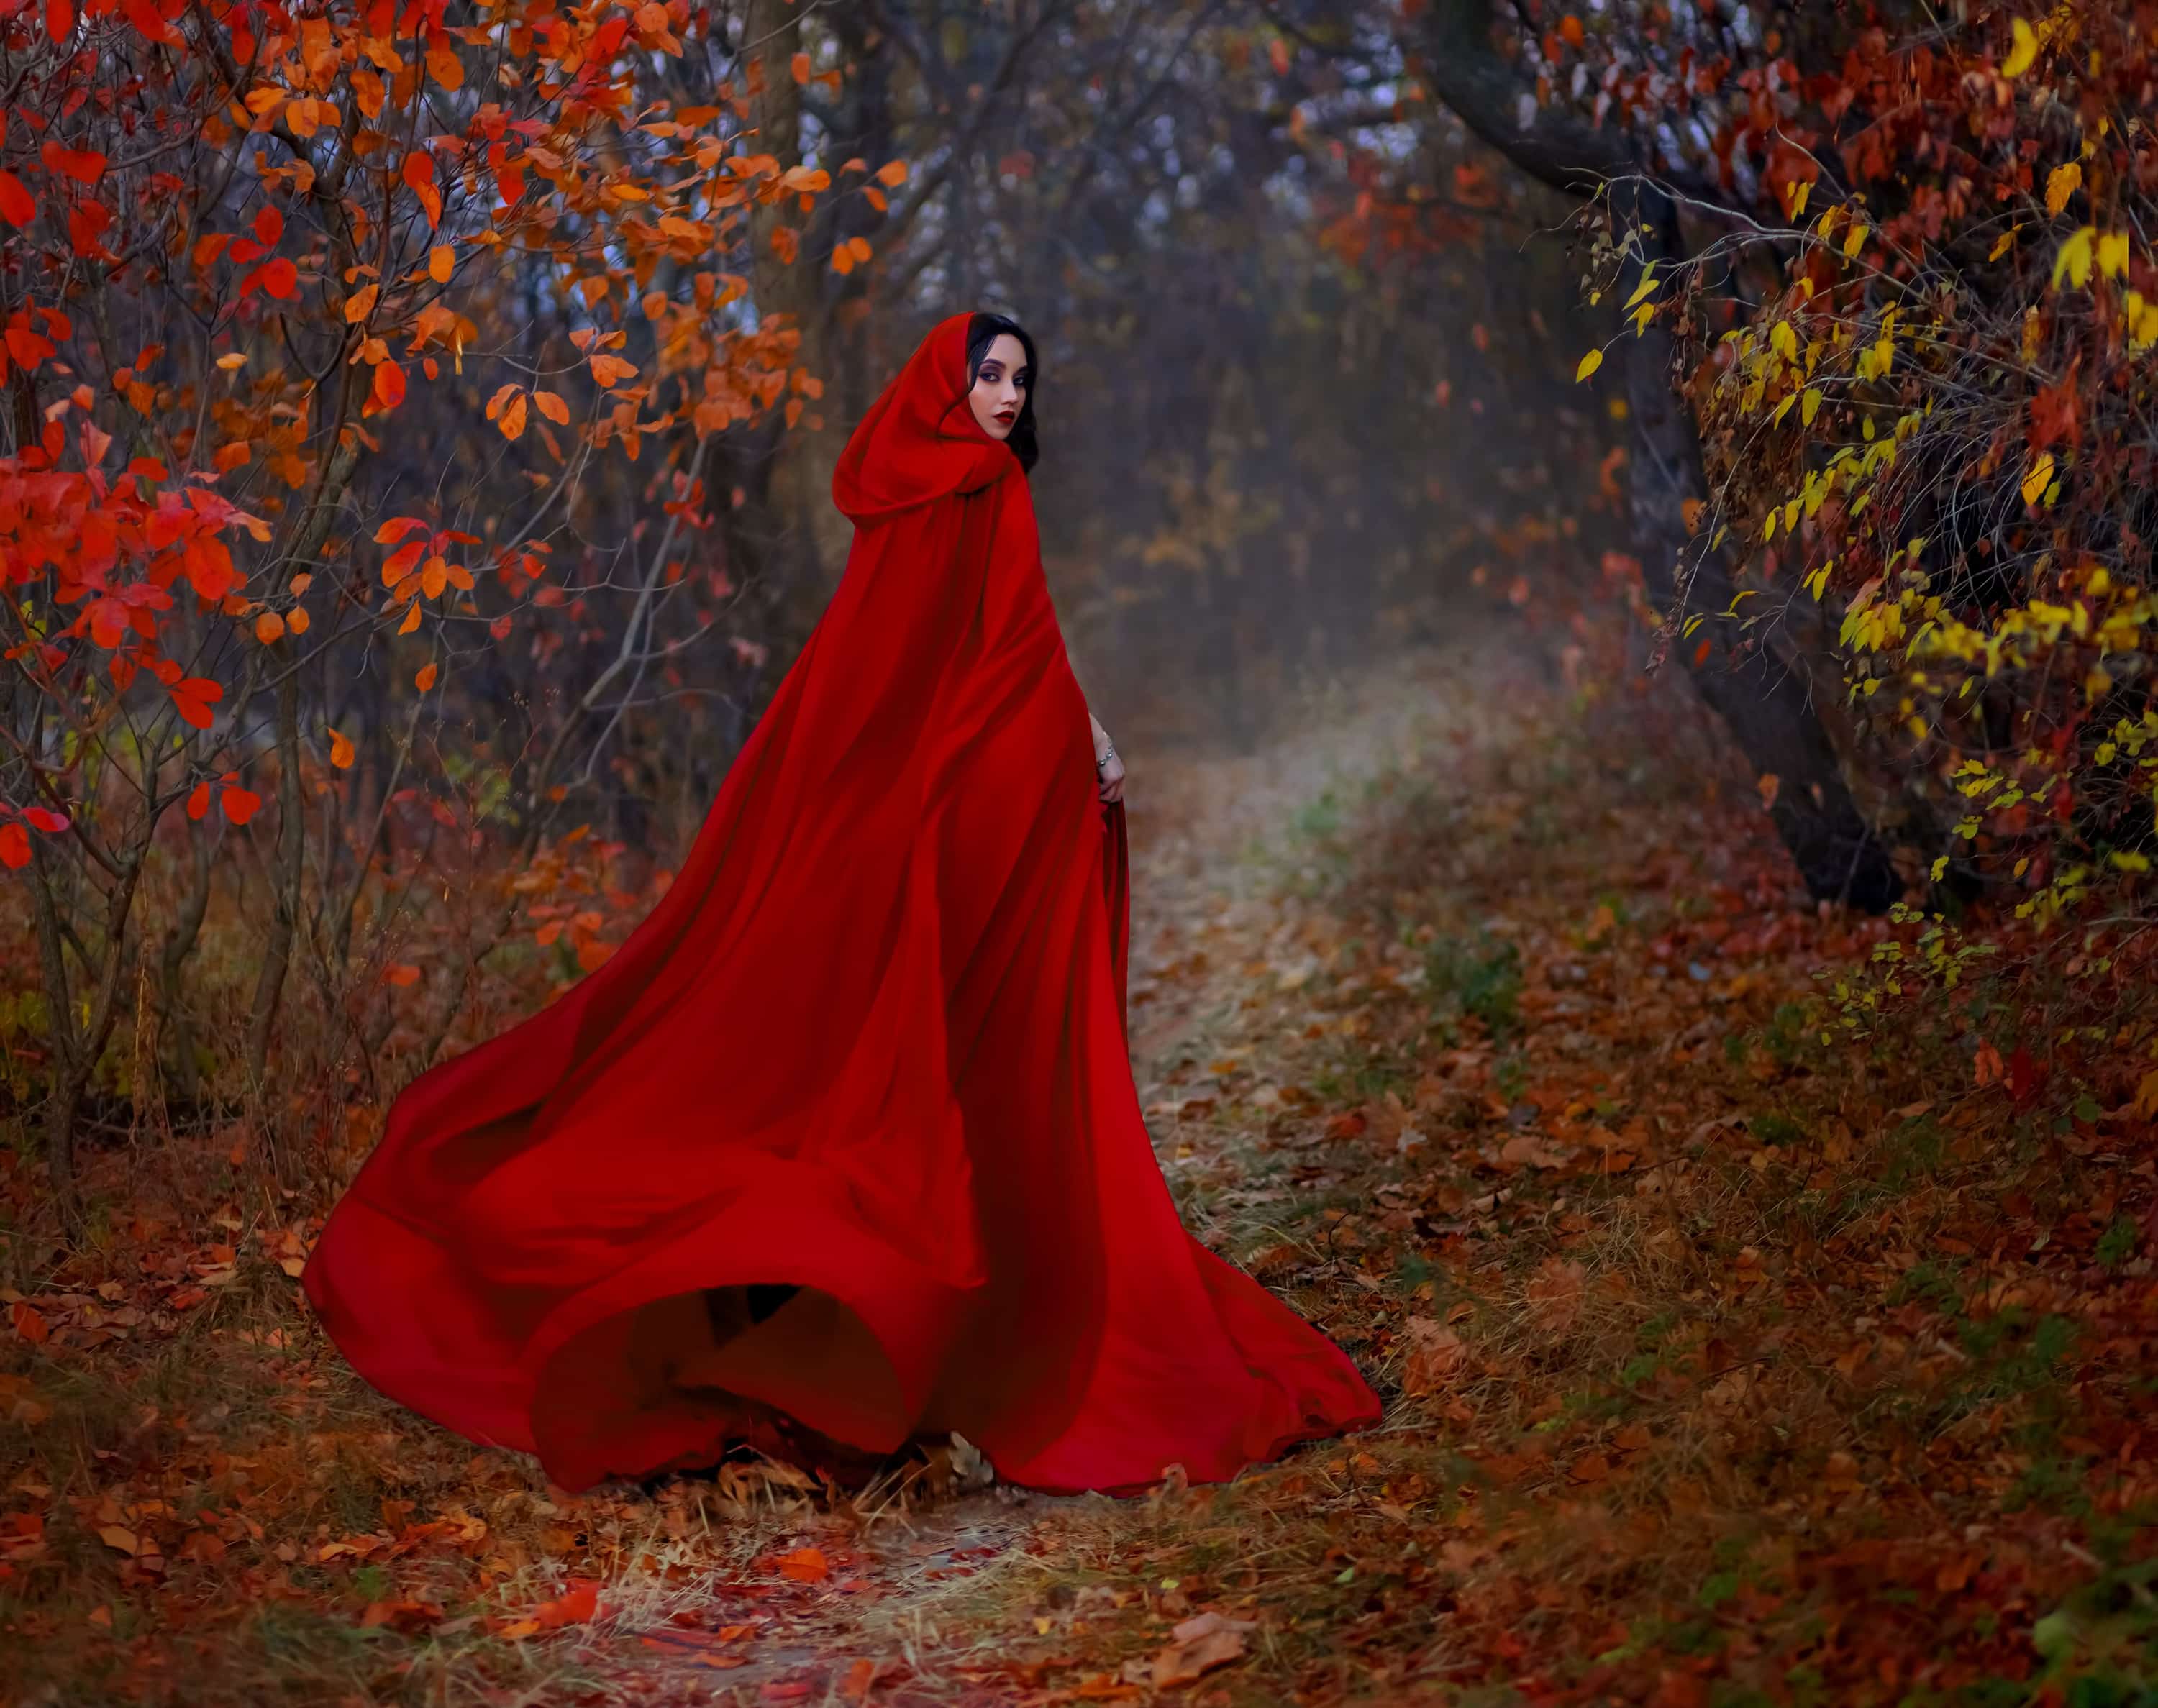 Art gothic fantasy woman like red riding hood walks in dark autumn forest. 